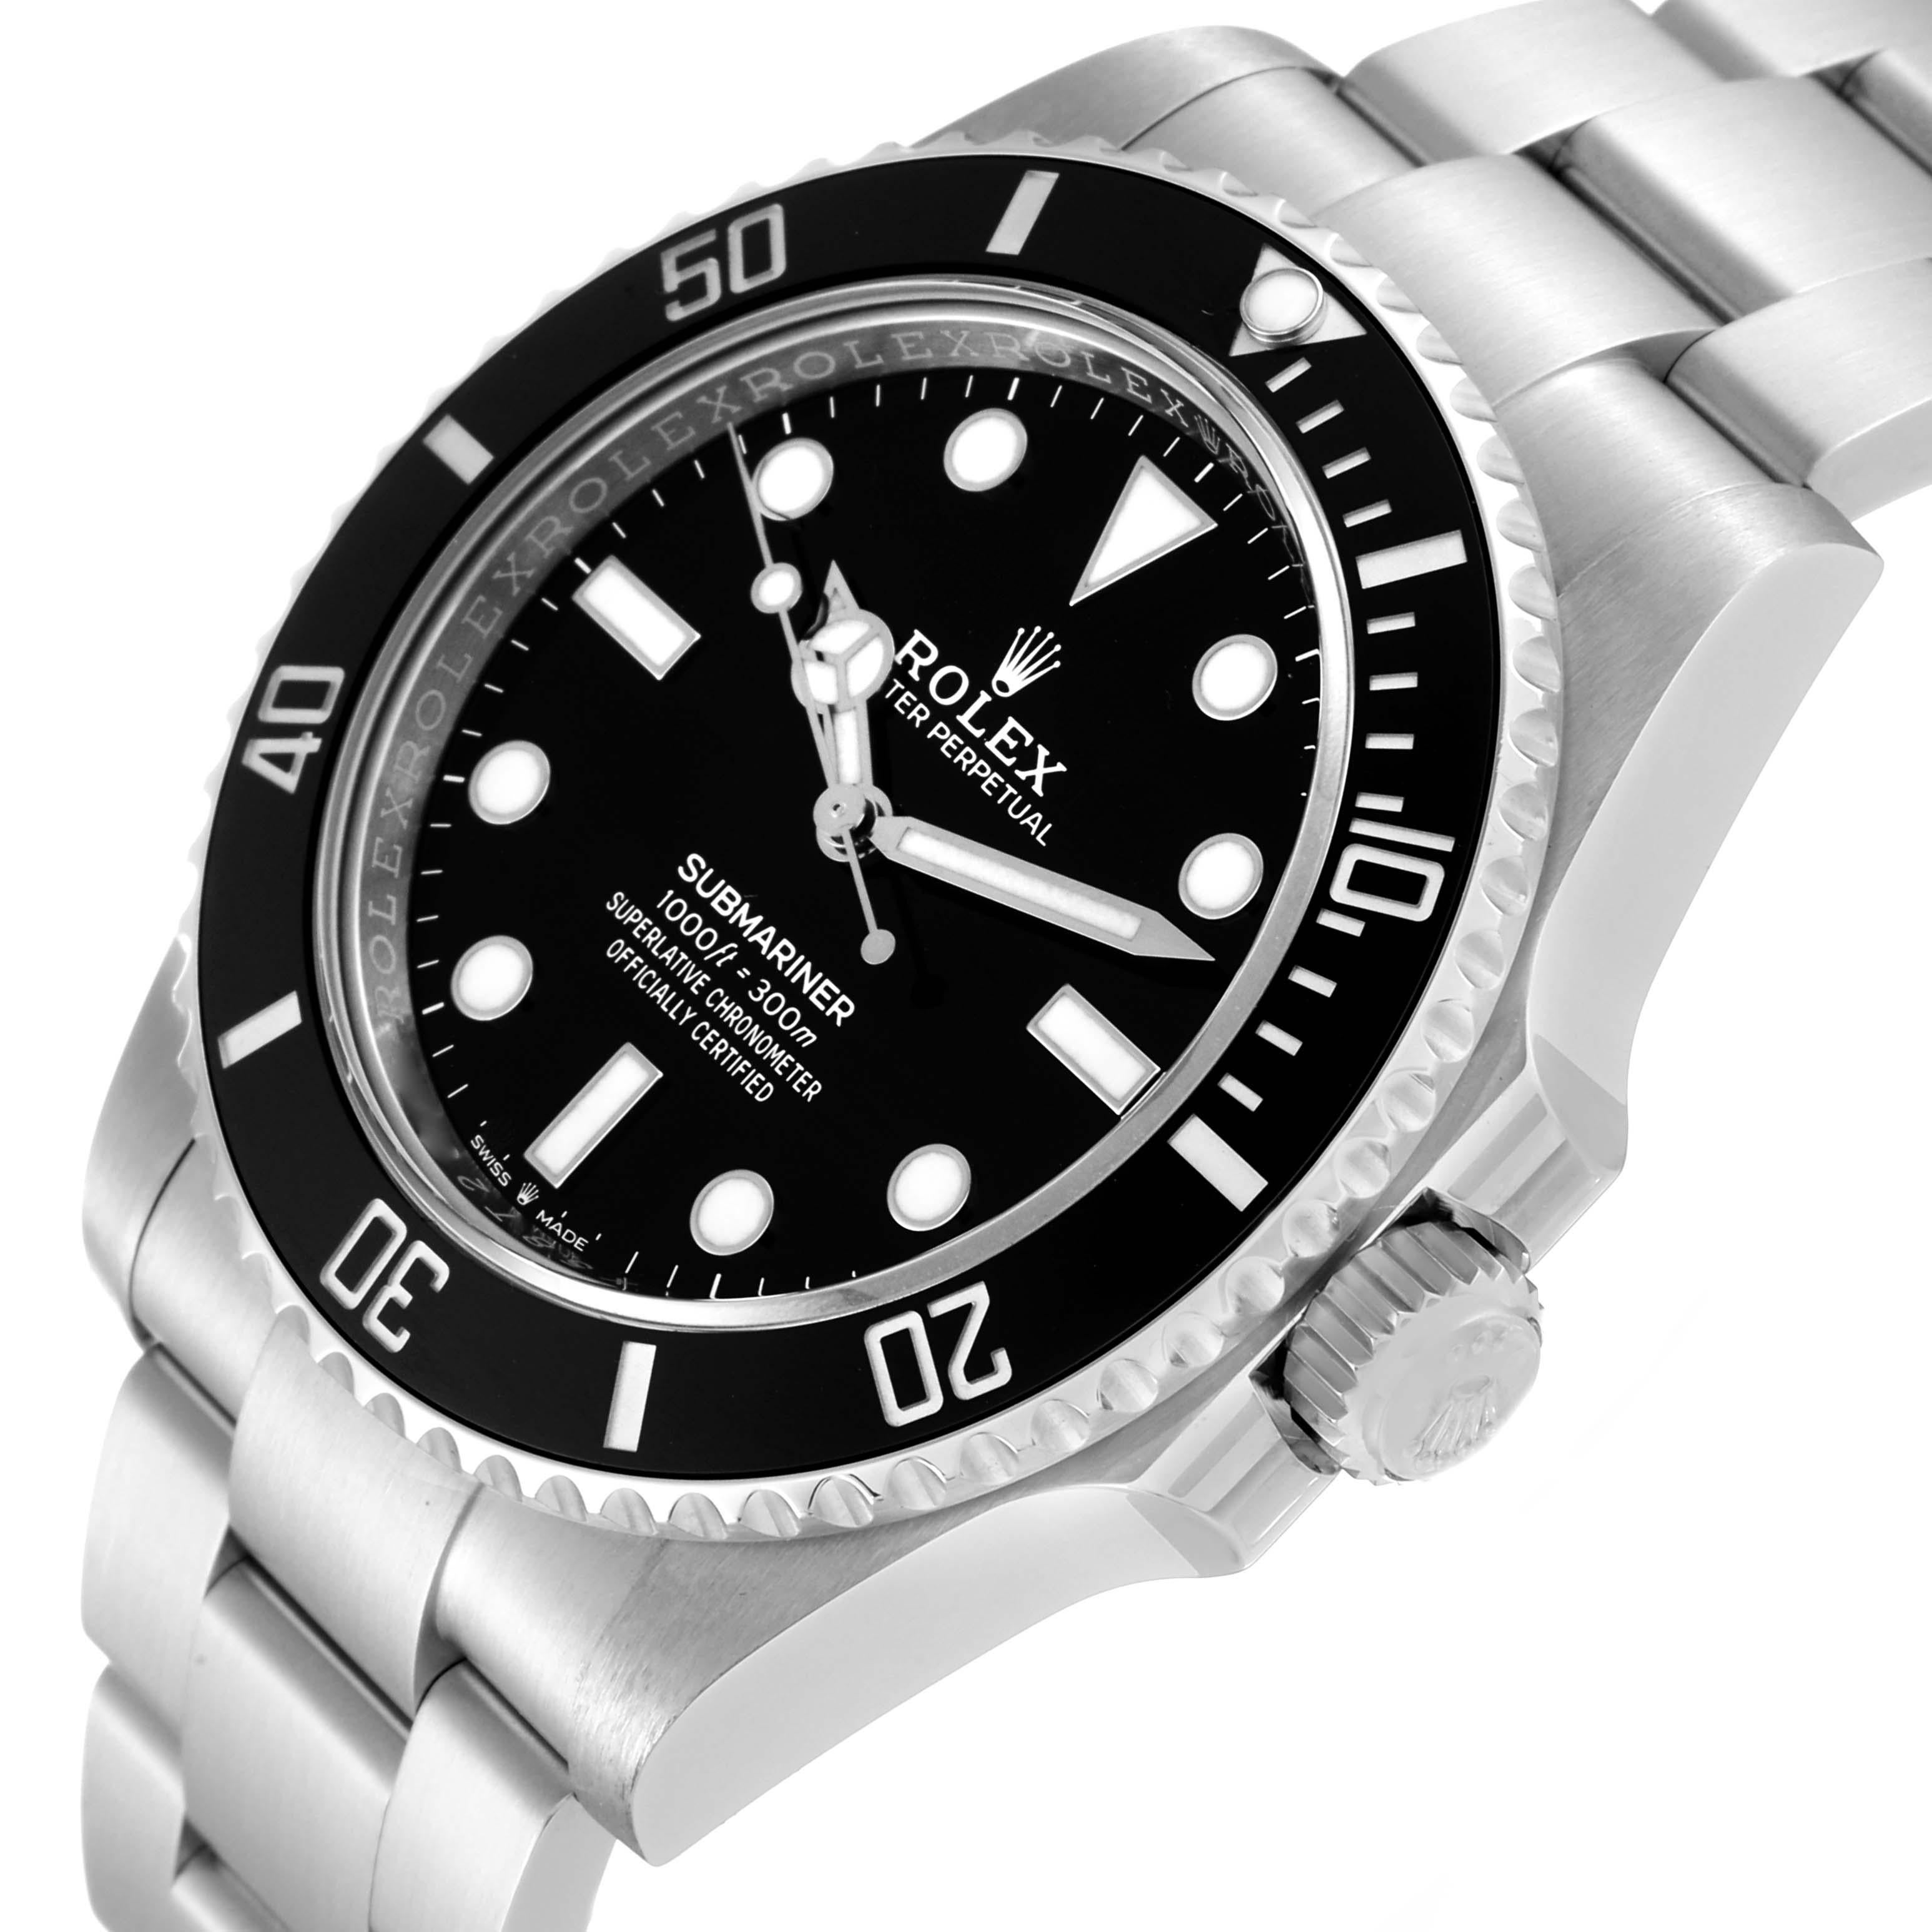 Rolex Submariner Non-Date Ceramic Bezel Steel Mens Watch 124060 Box Card 1